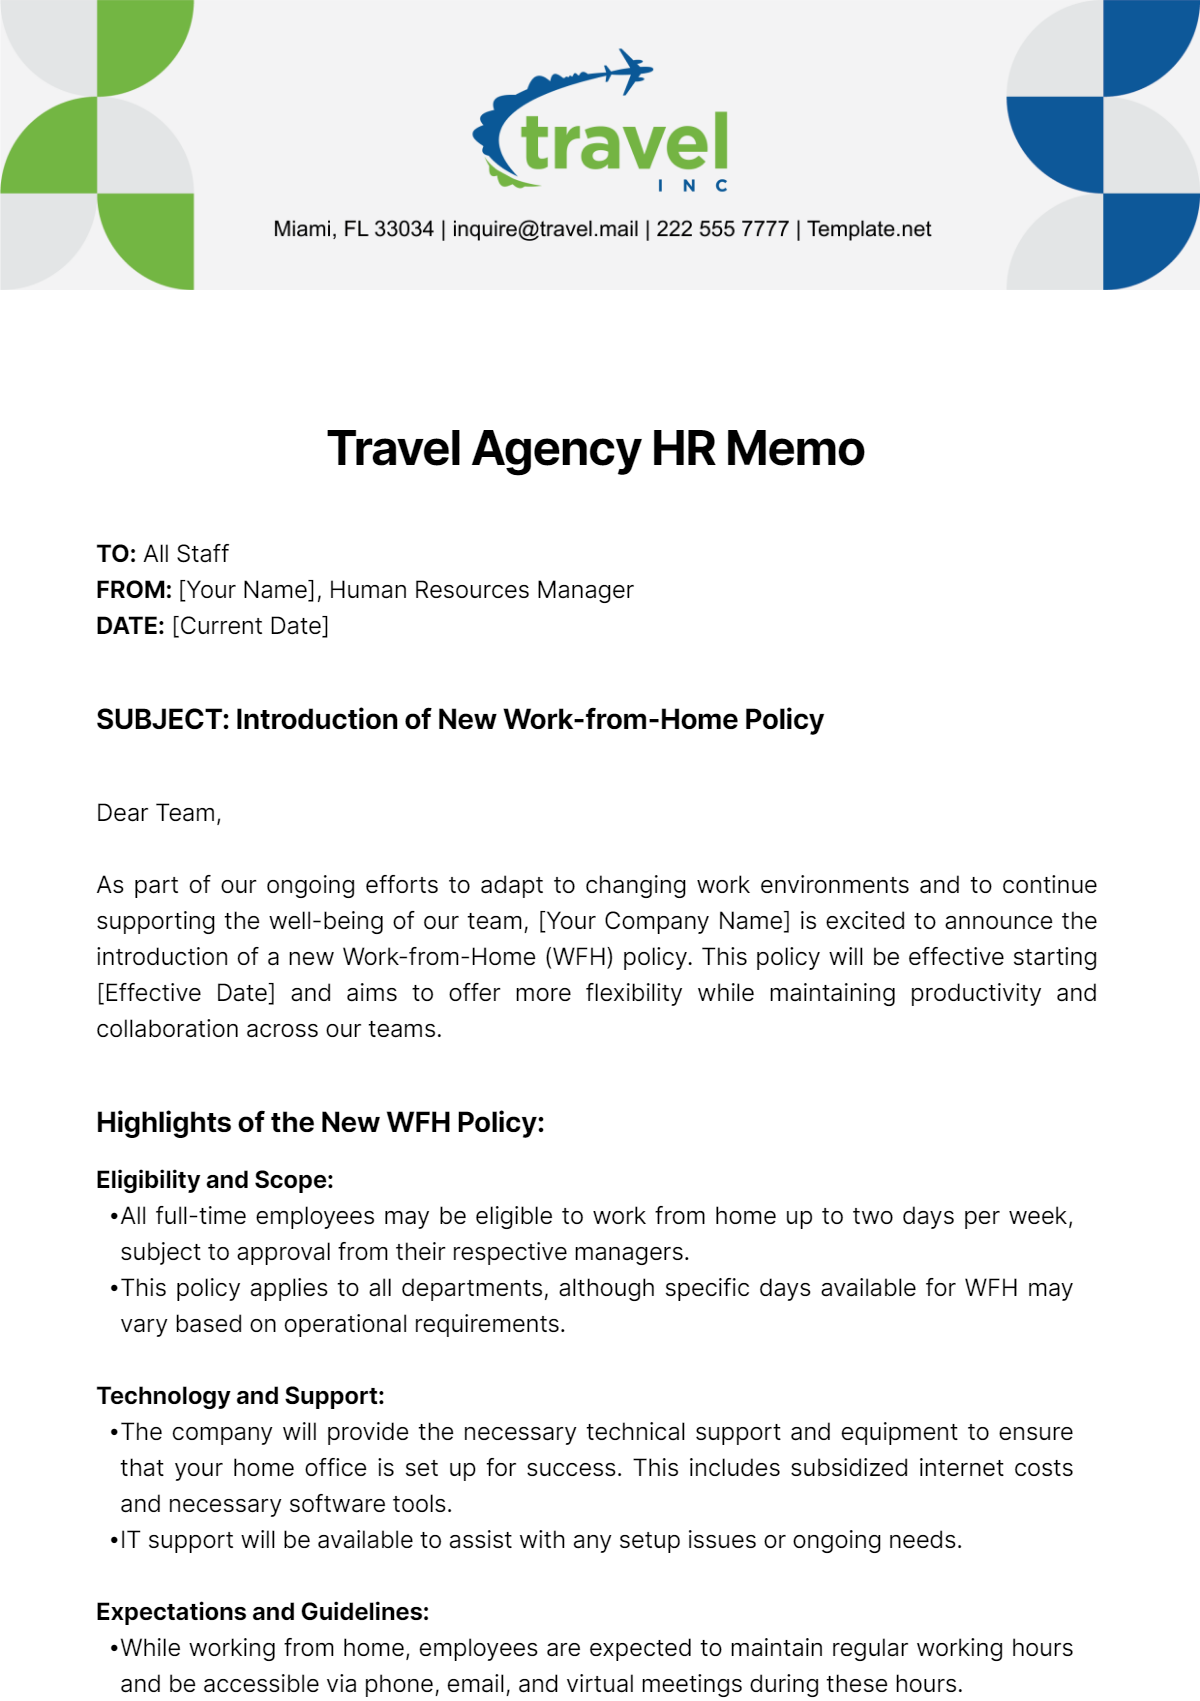 Free Travel Agency HR Memo Template